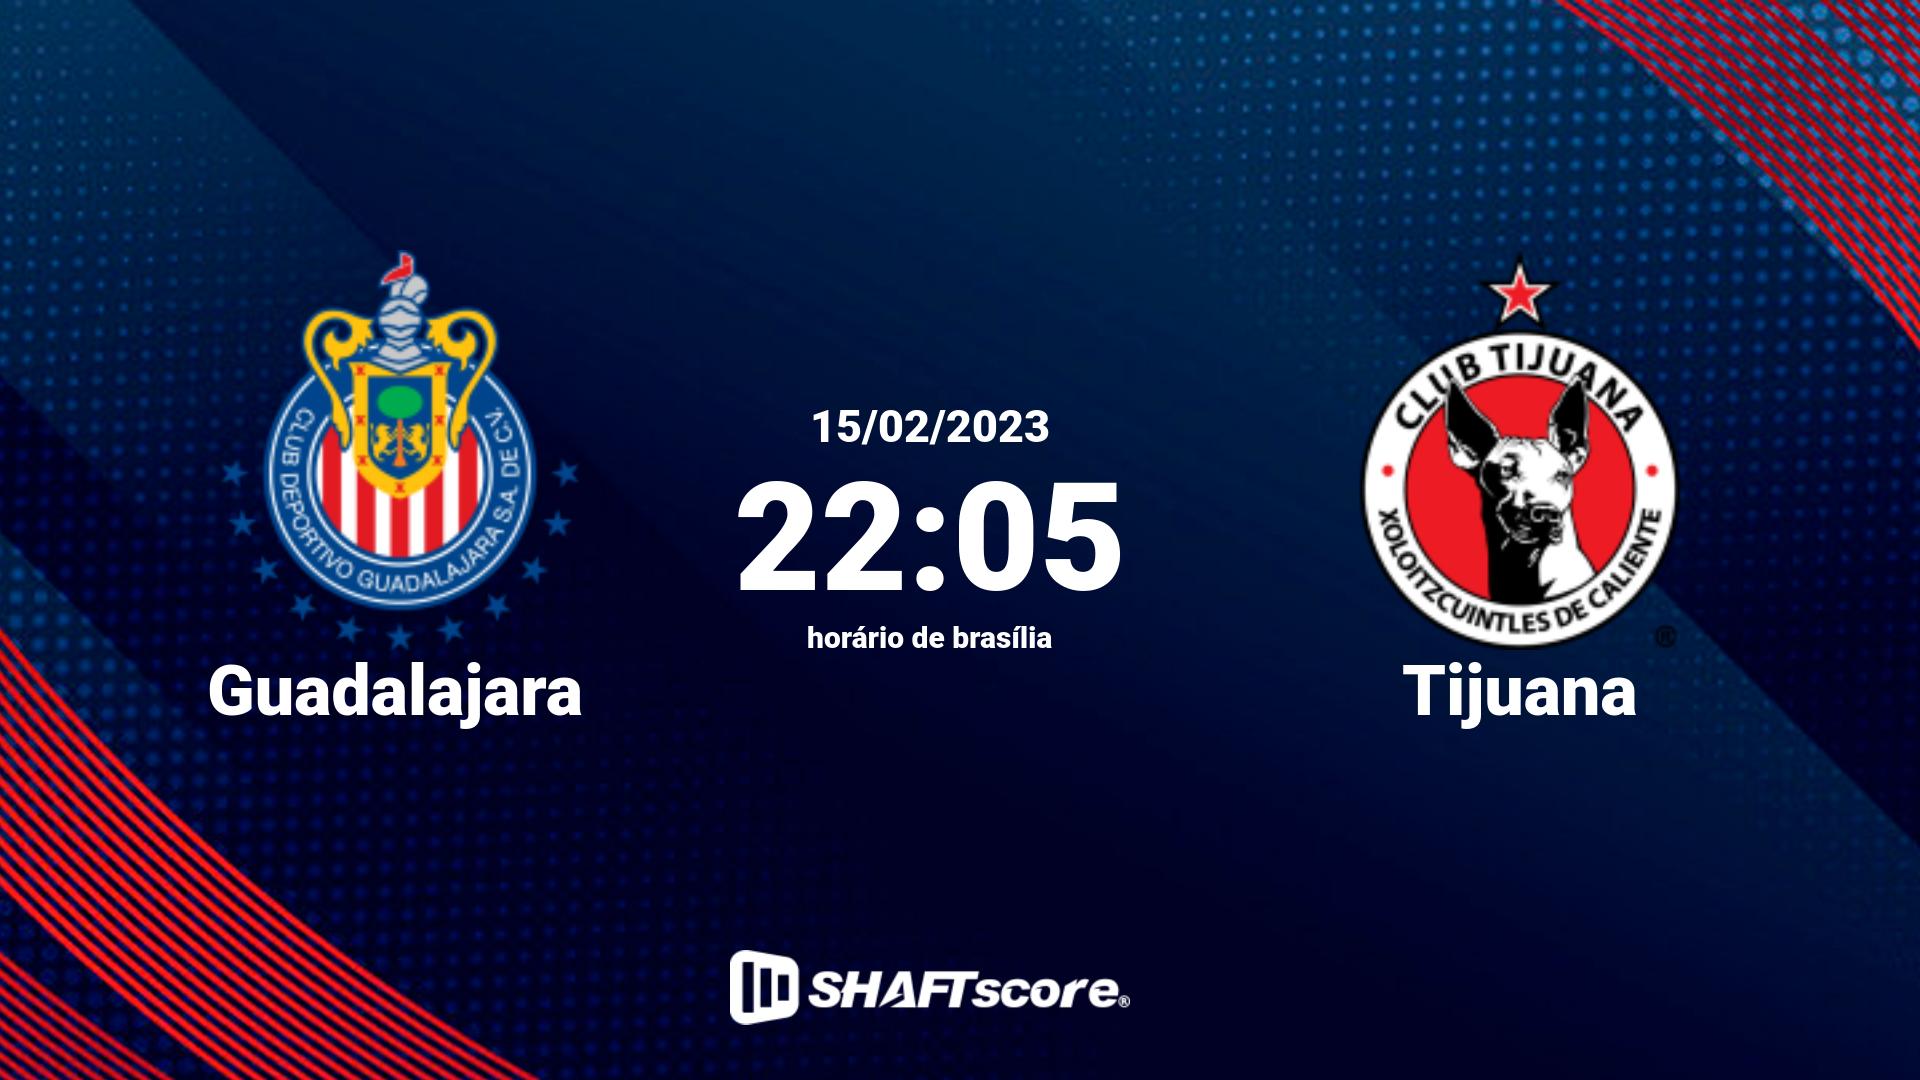 Estatísticas do jogo Guadalajara vs Tijuana 15.02 22:05